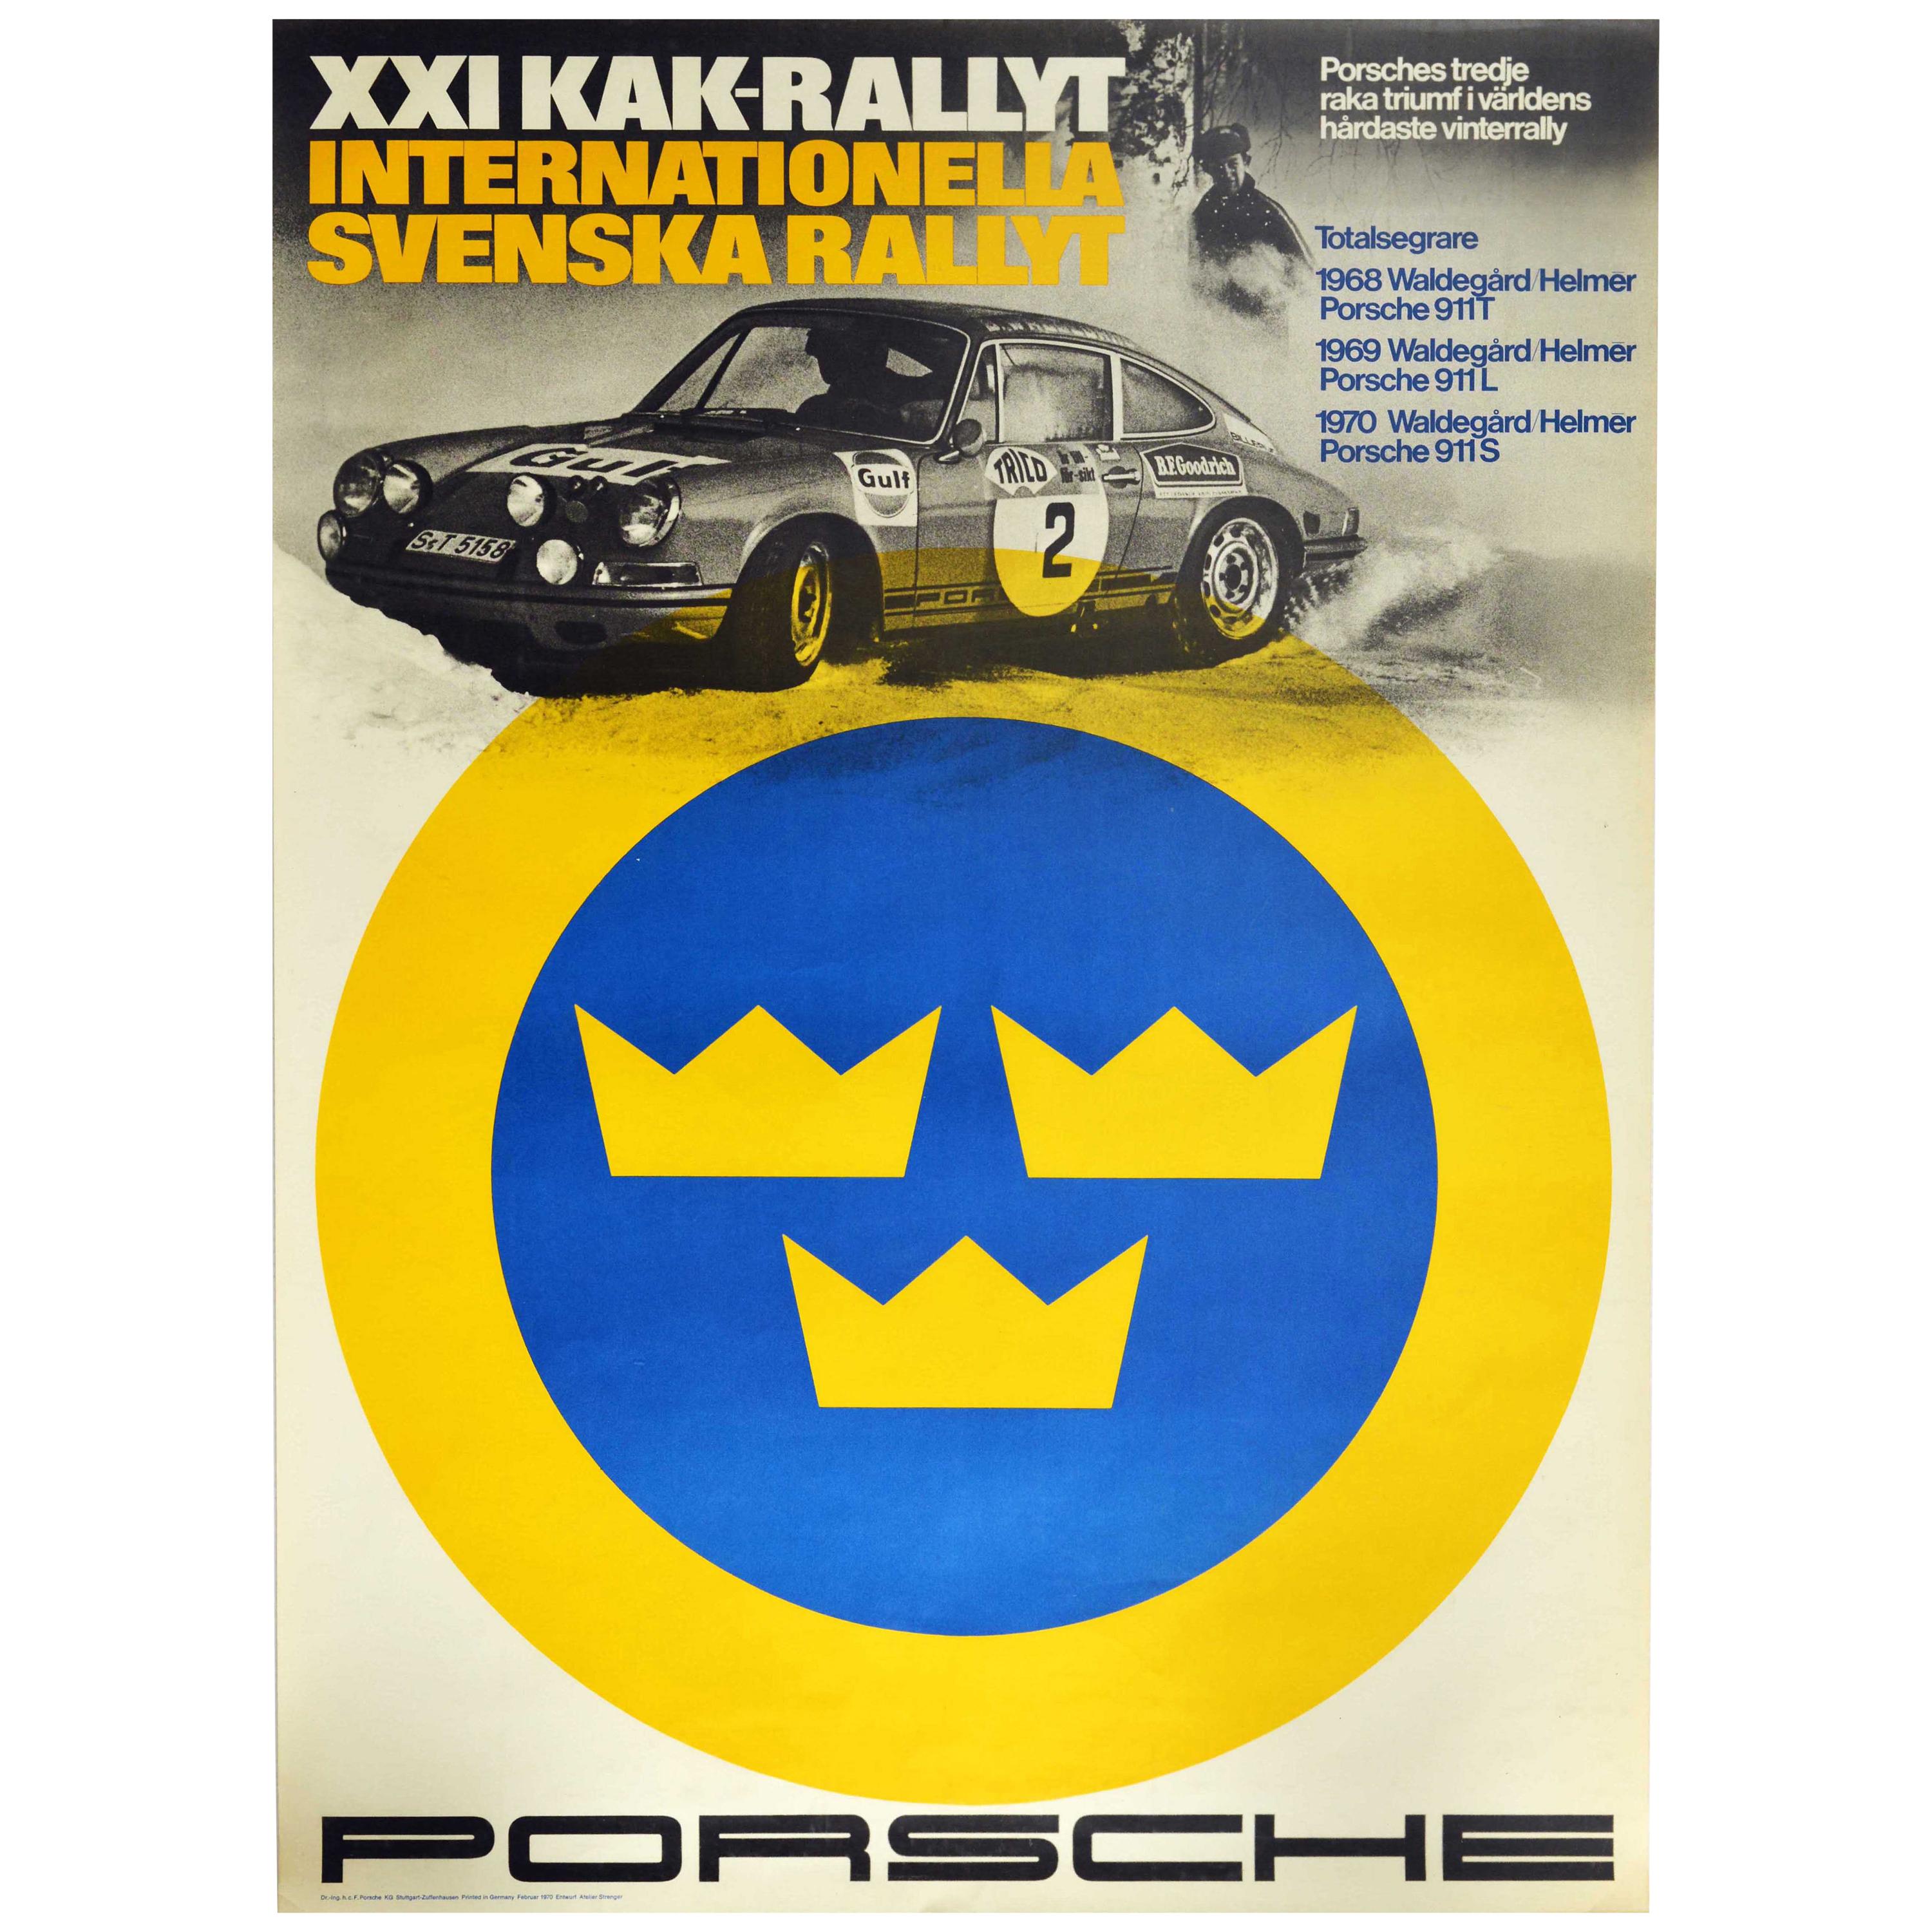 Original Vintage Poster Porsche 911 Svenska Rallyt Swedish Rally Auto Racing Car